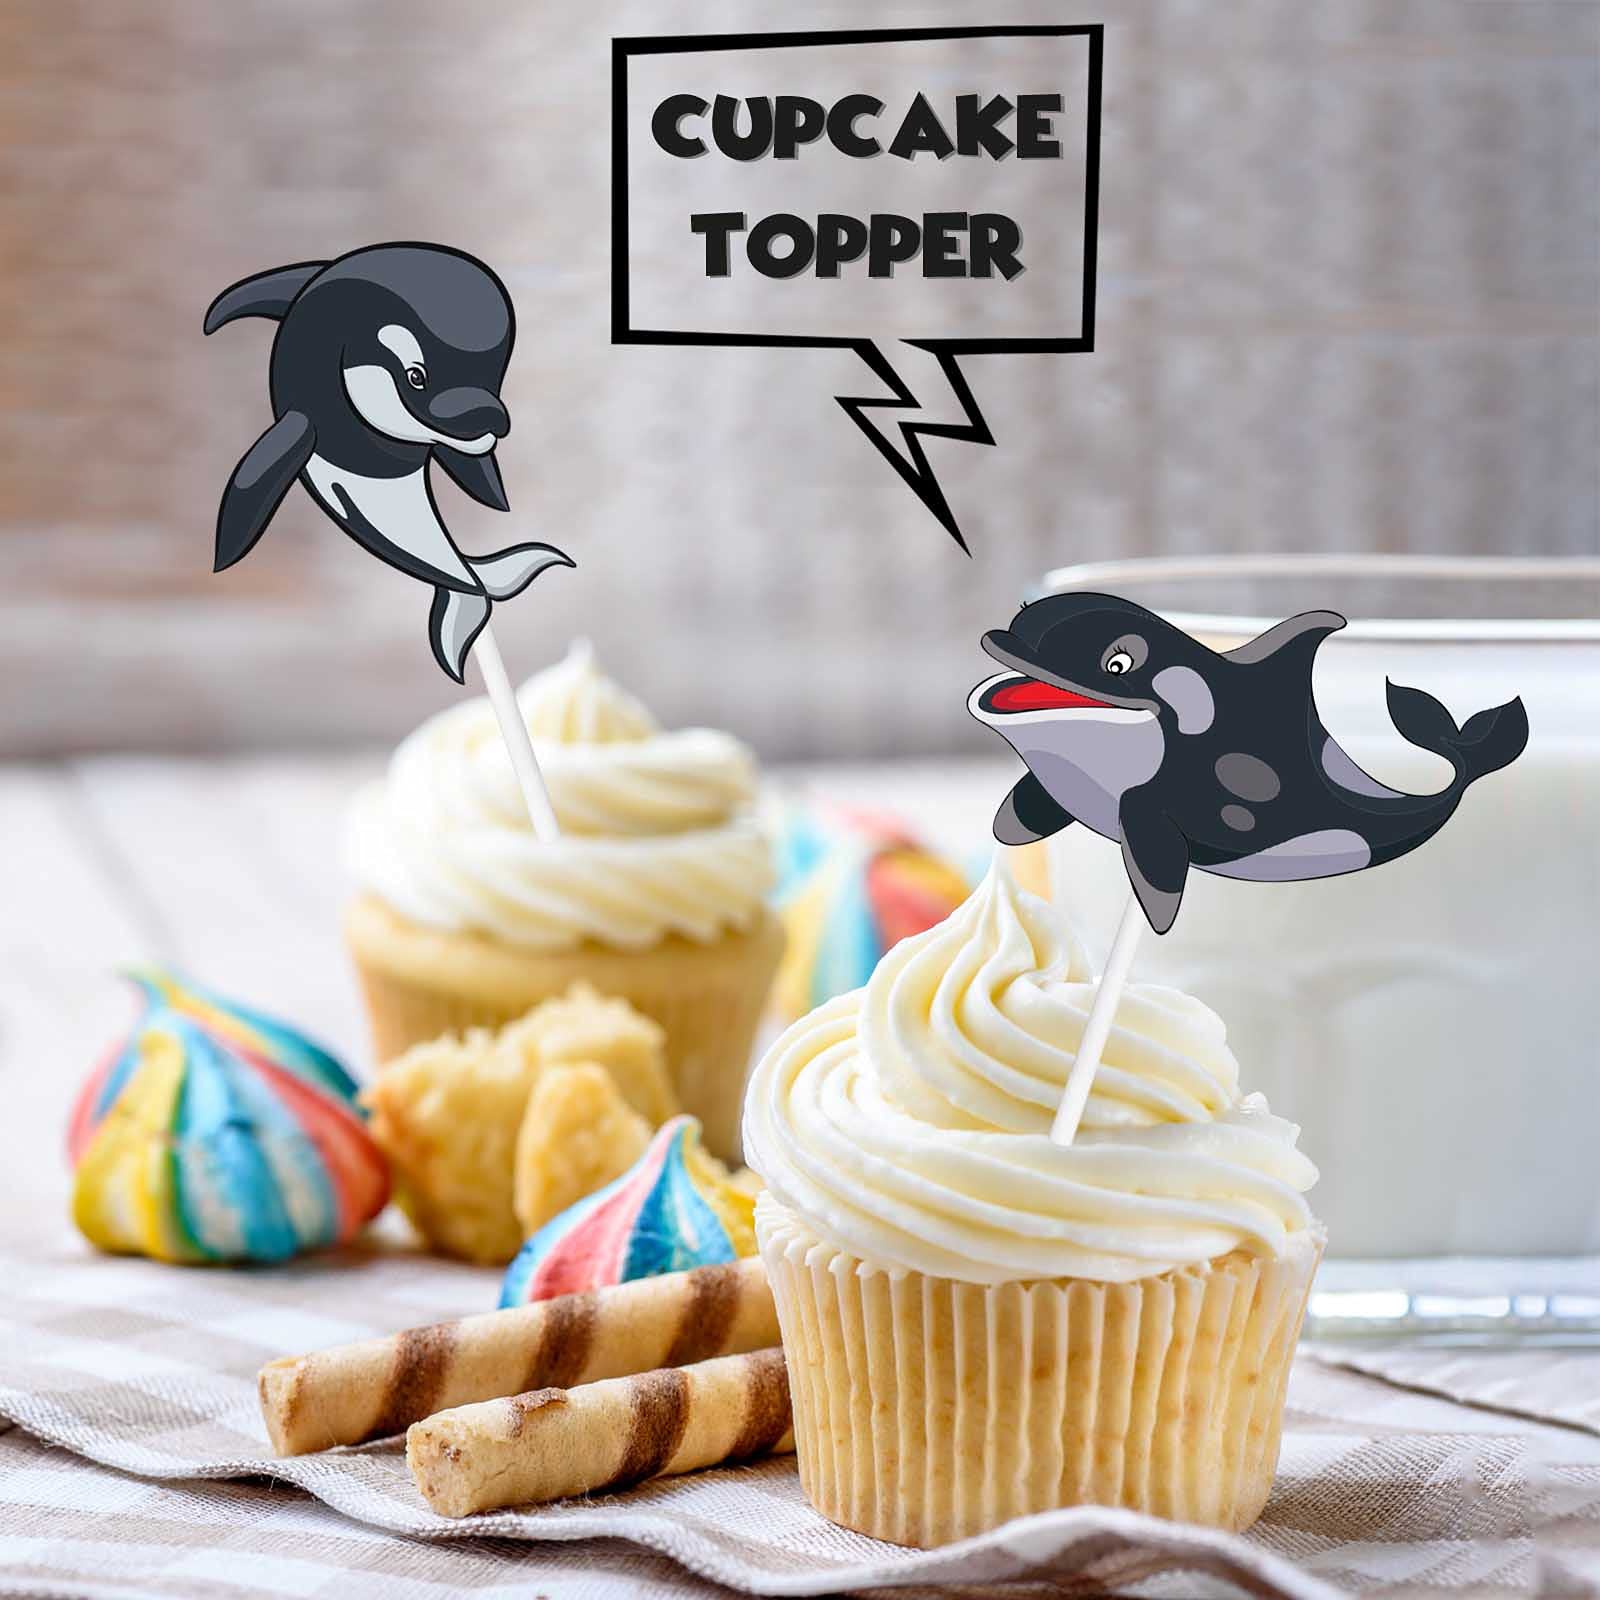 18pcs Black Glitter Dessert Cupcake Nautical Ocean Killer Whale Sea Creature Theme Decor Supplies Baby Shower Boys Girls Happy Birthday Party Decorations